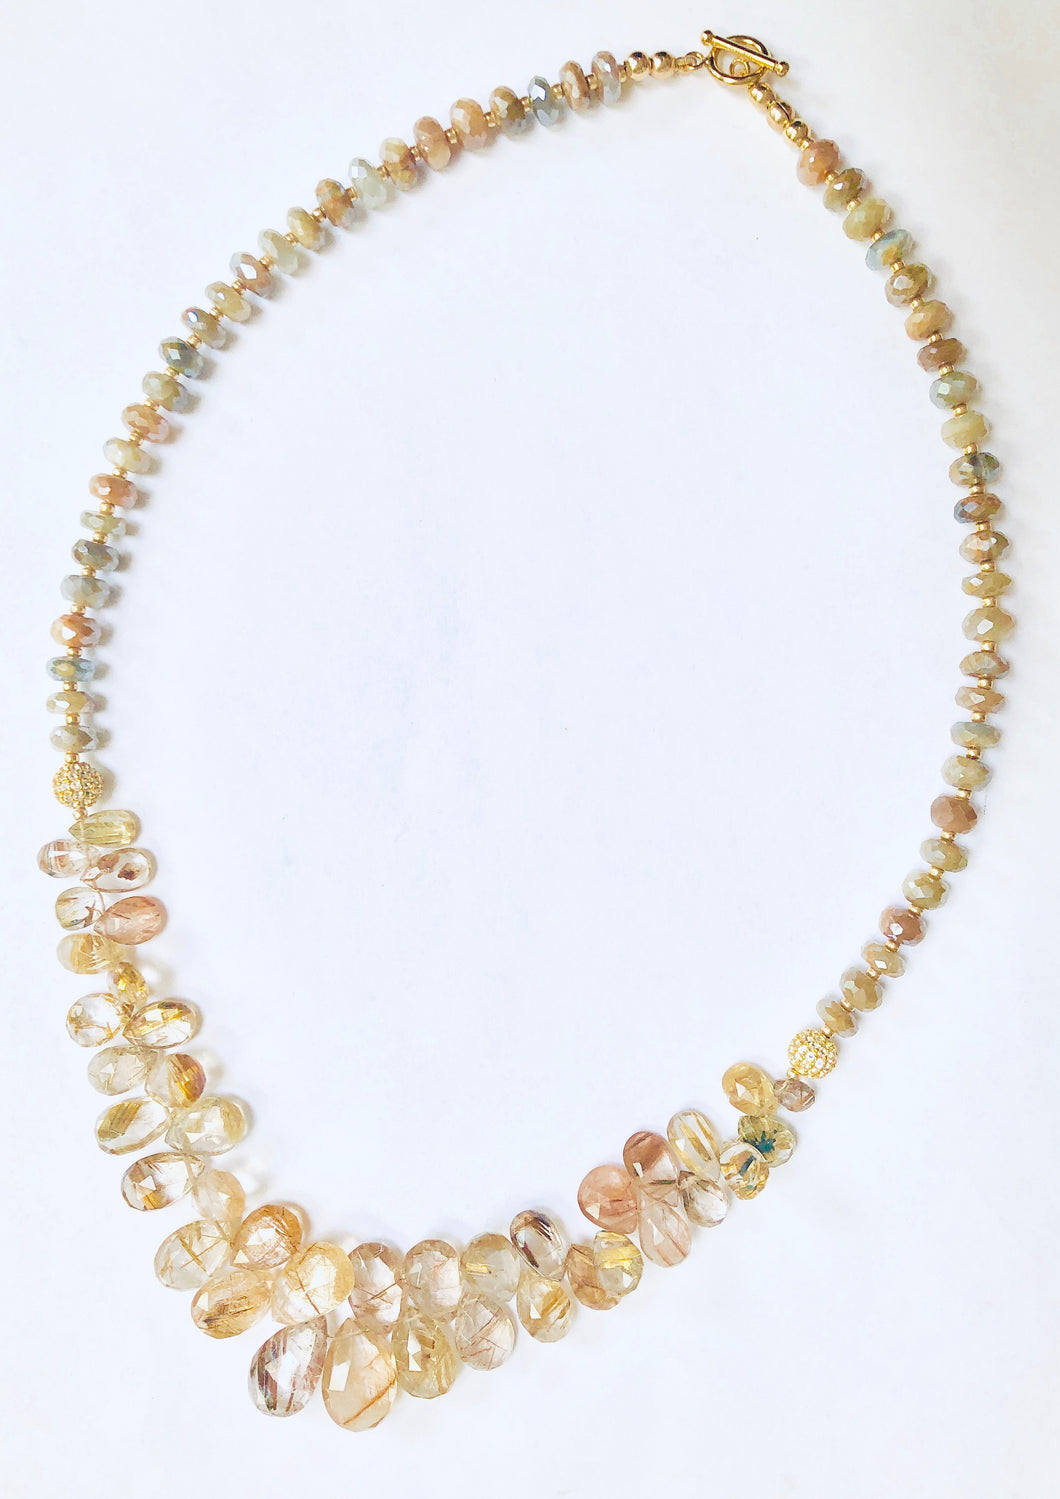 Golden Moonstone and Golden Reticulated Quartz Necklace